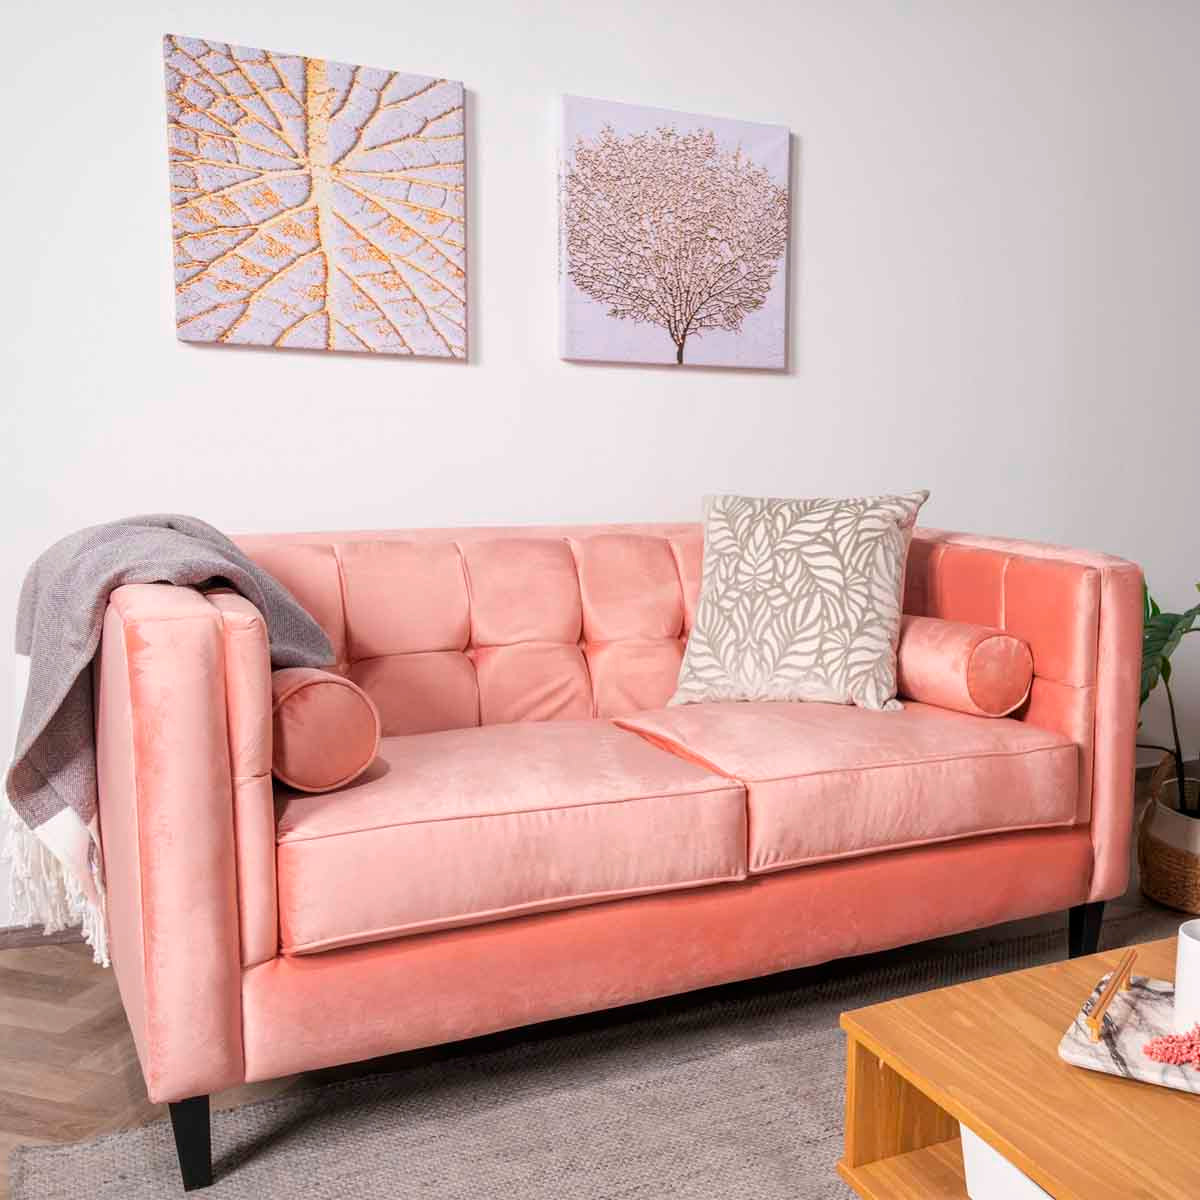 Yoluckea Sofá de dos plazas, sofá pequeño, muebles tapizados con dos  almohadas y patas de metal dorado adecuado para espacios pequeños (rosa)